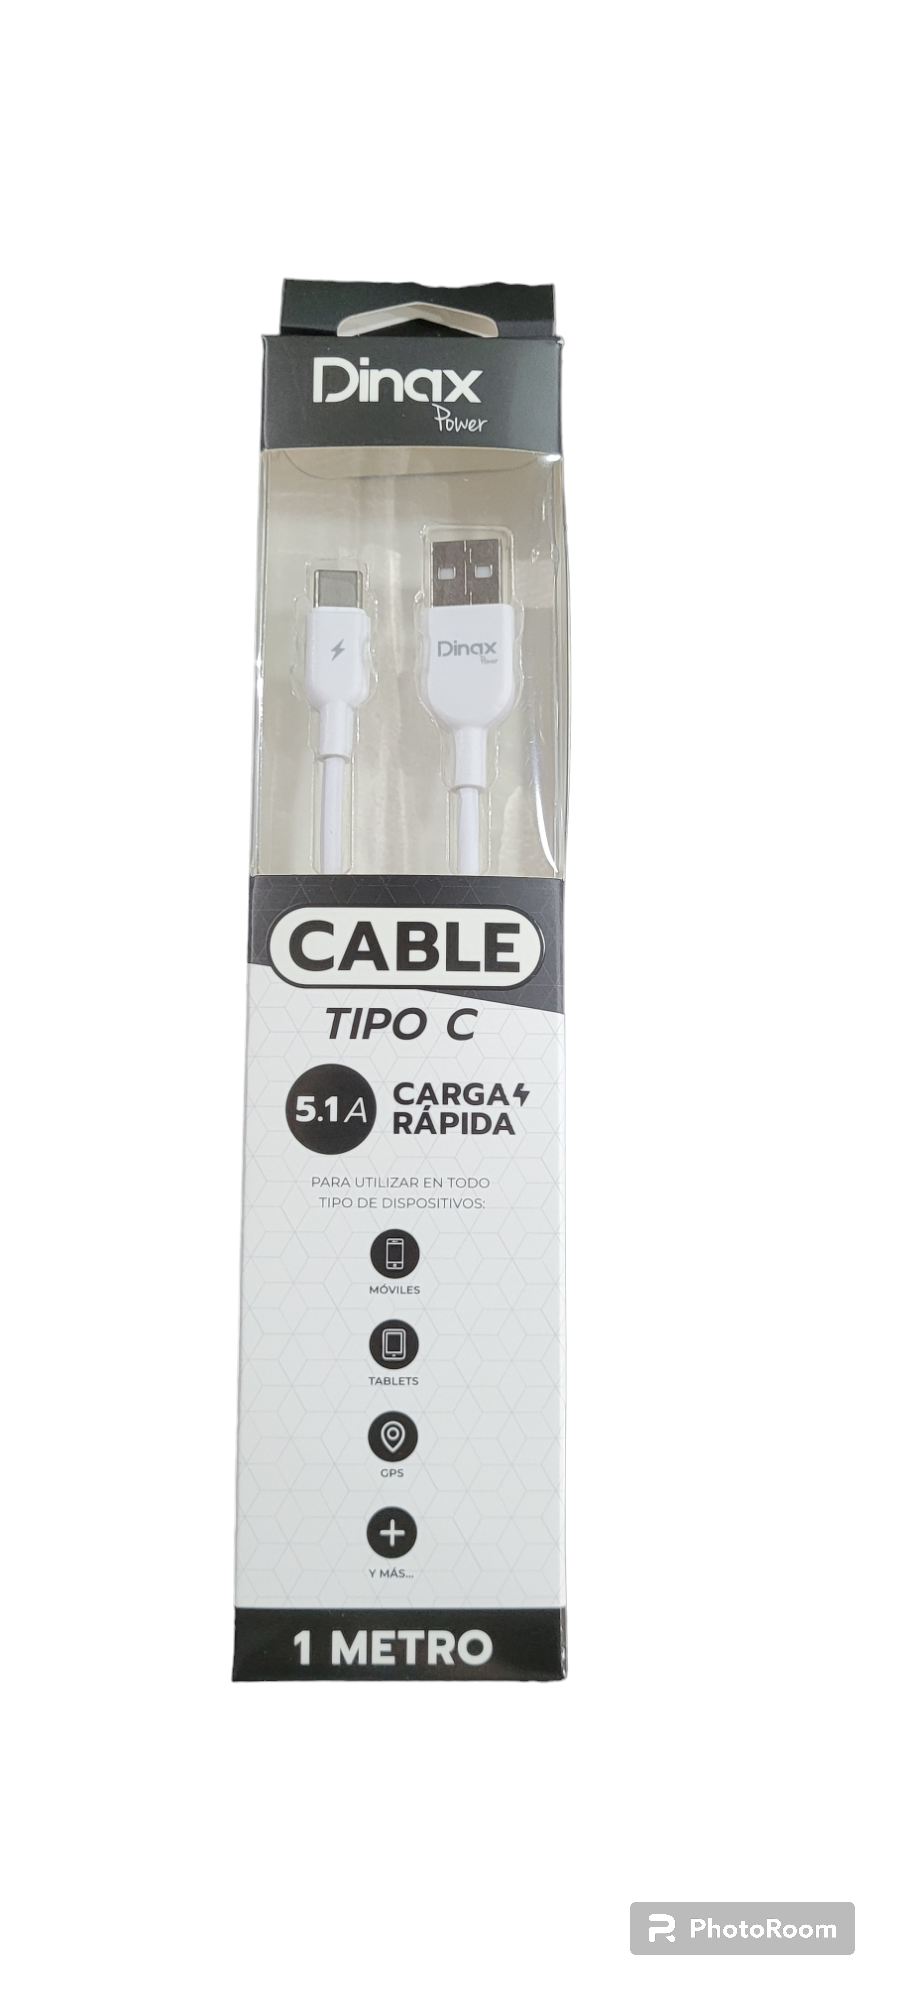 CABLE USB A TIPO C DINAX 4.2A CARGA RAPIDA